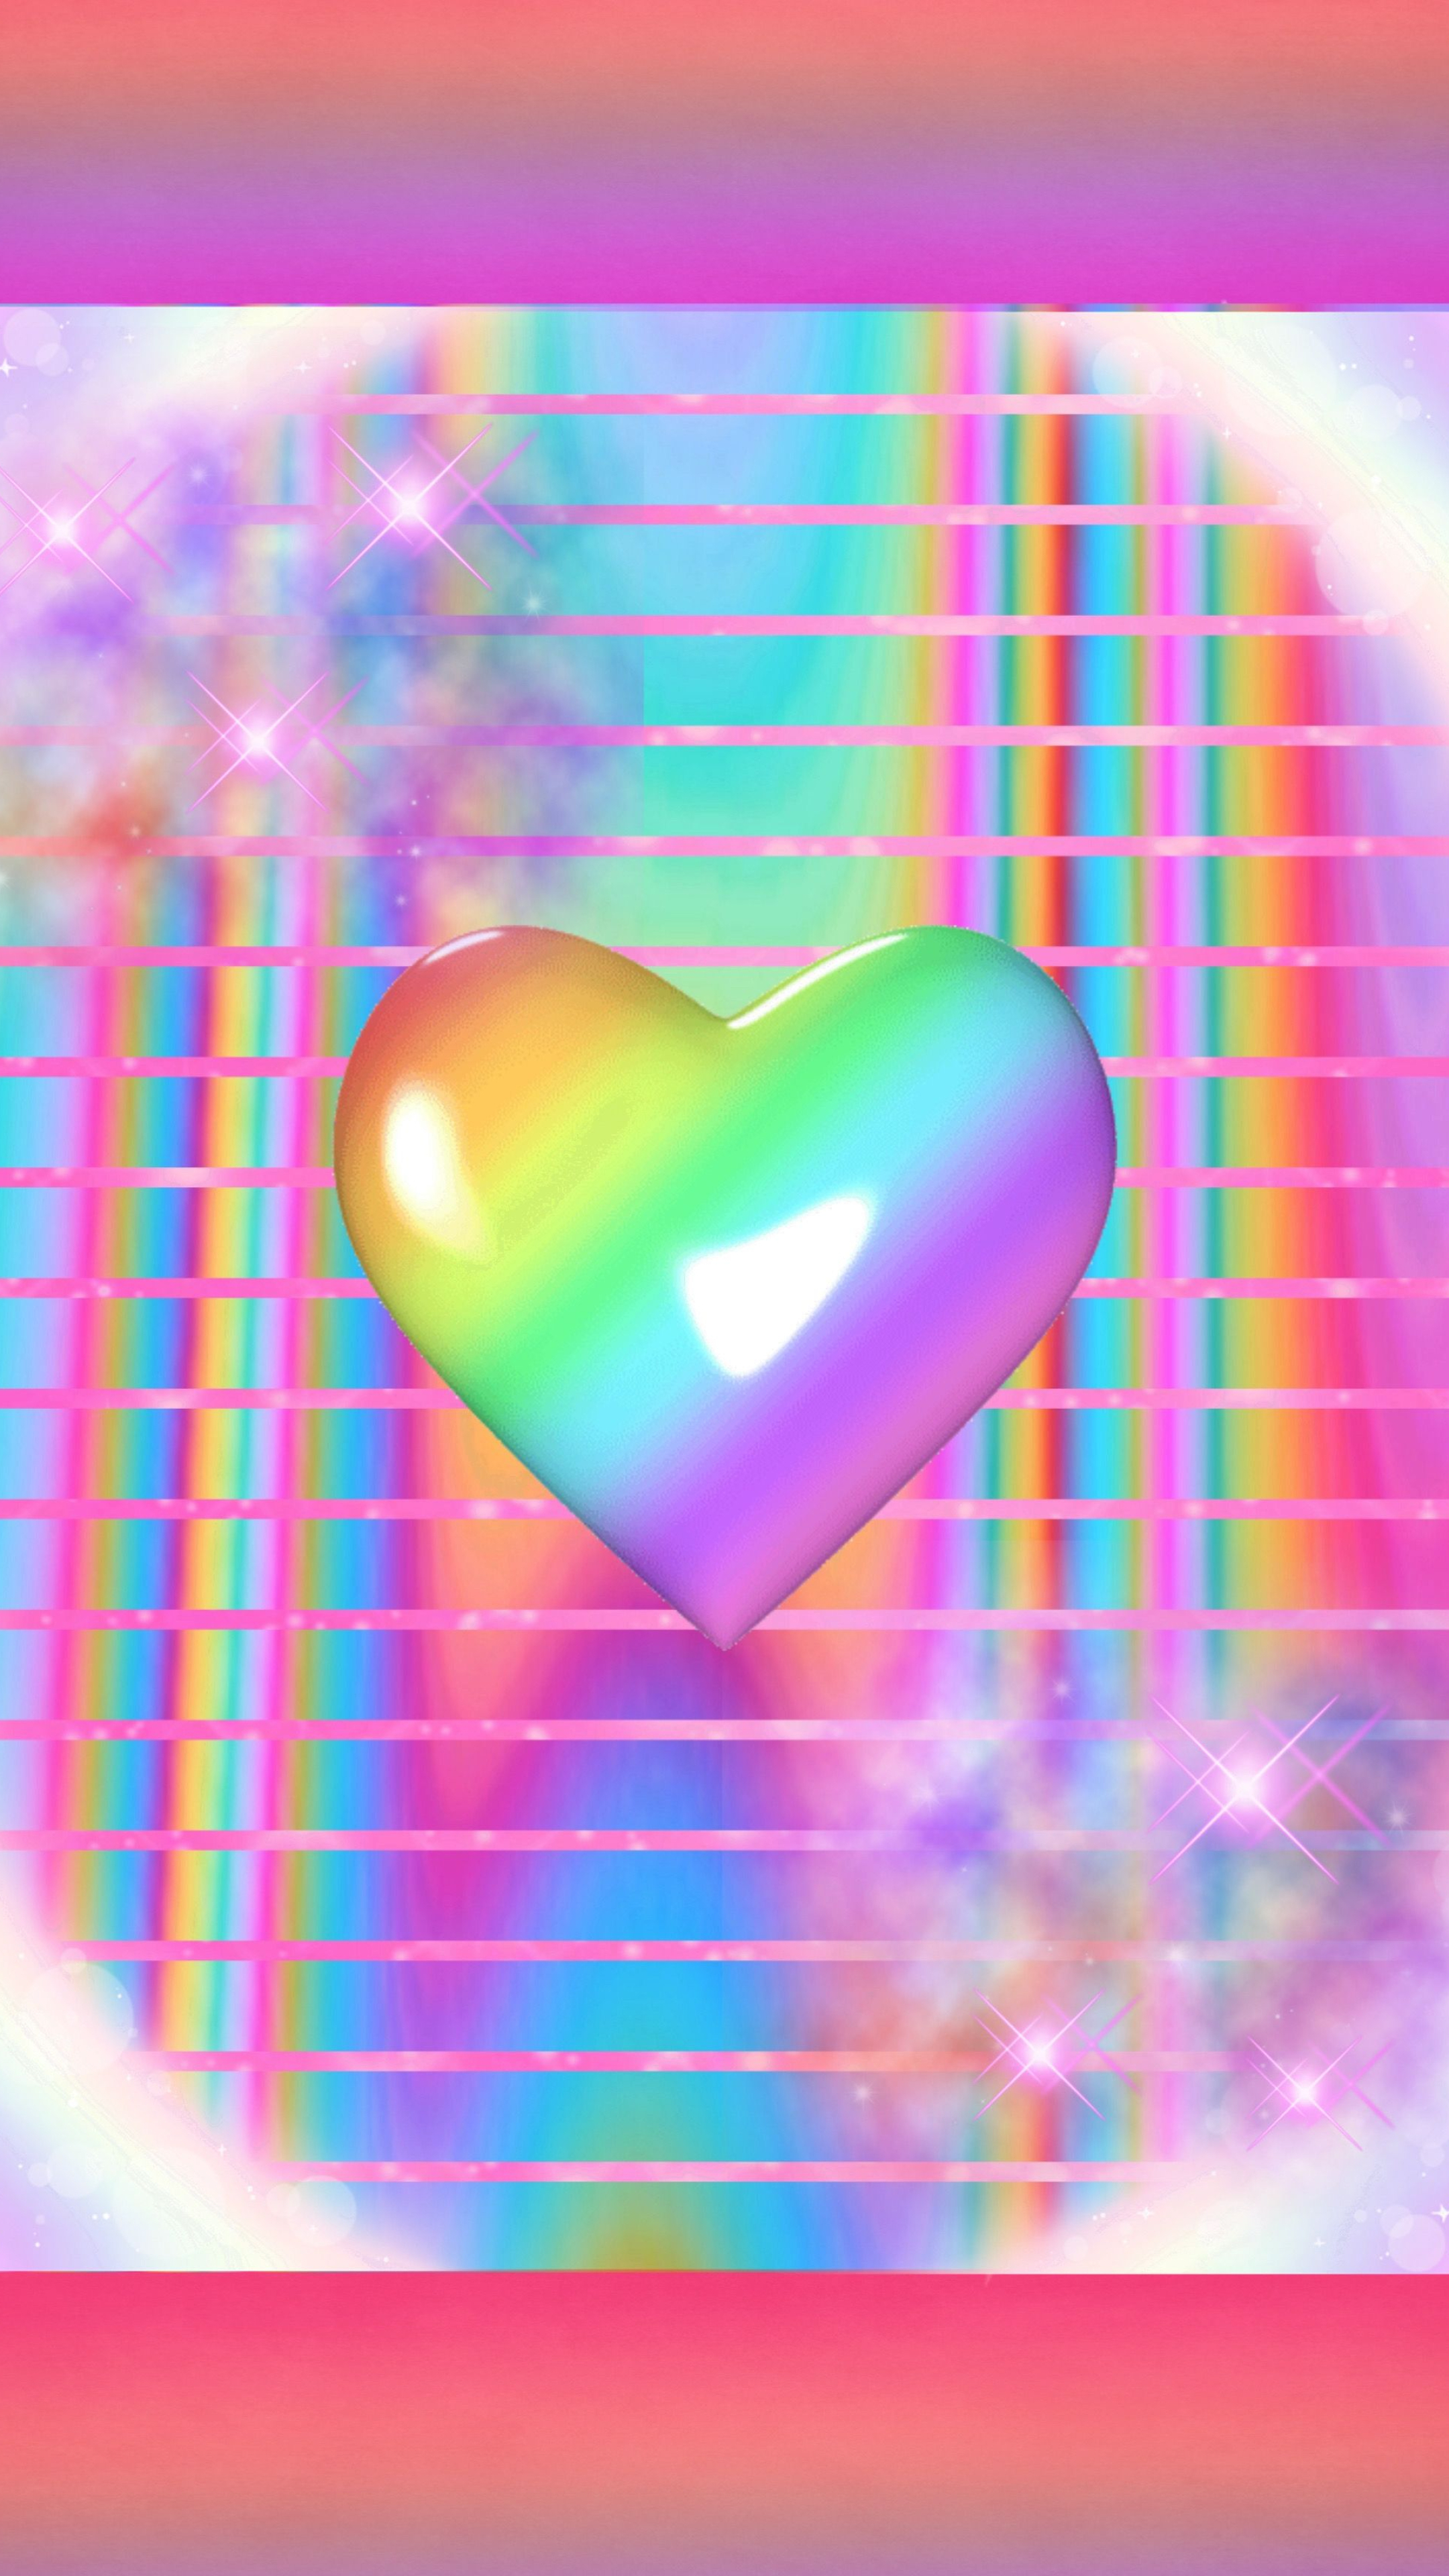 2160x3840 Rainbow heart phone wallpaper | Heart wallpaper, Phone wallpaper, Heart iphone wallpaper